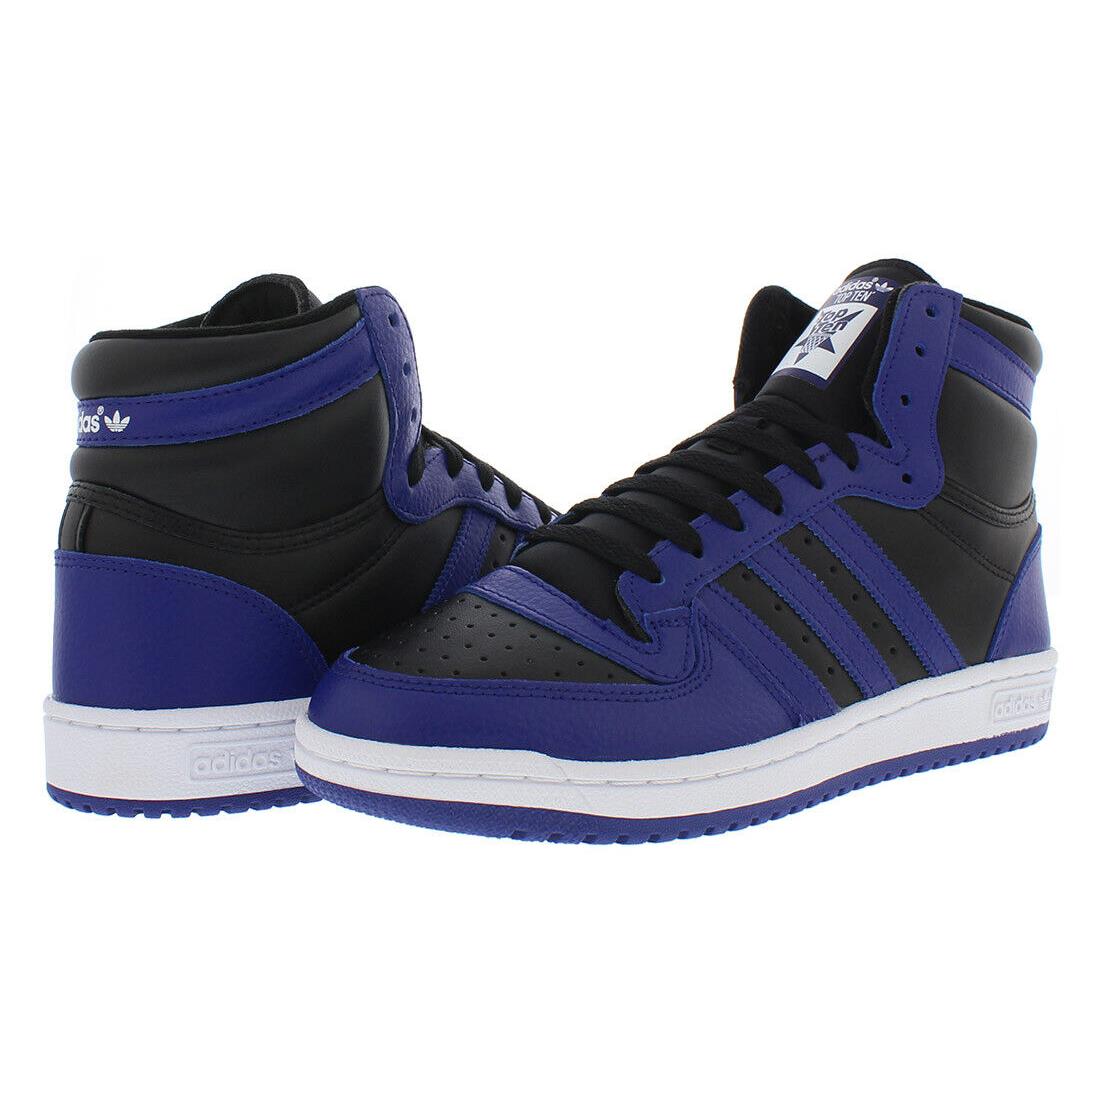 Adidas Top Ten Rb Mens Shoes - Black/Purple, Main: Black